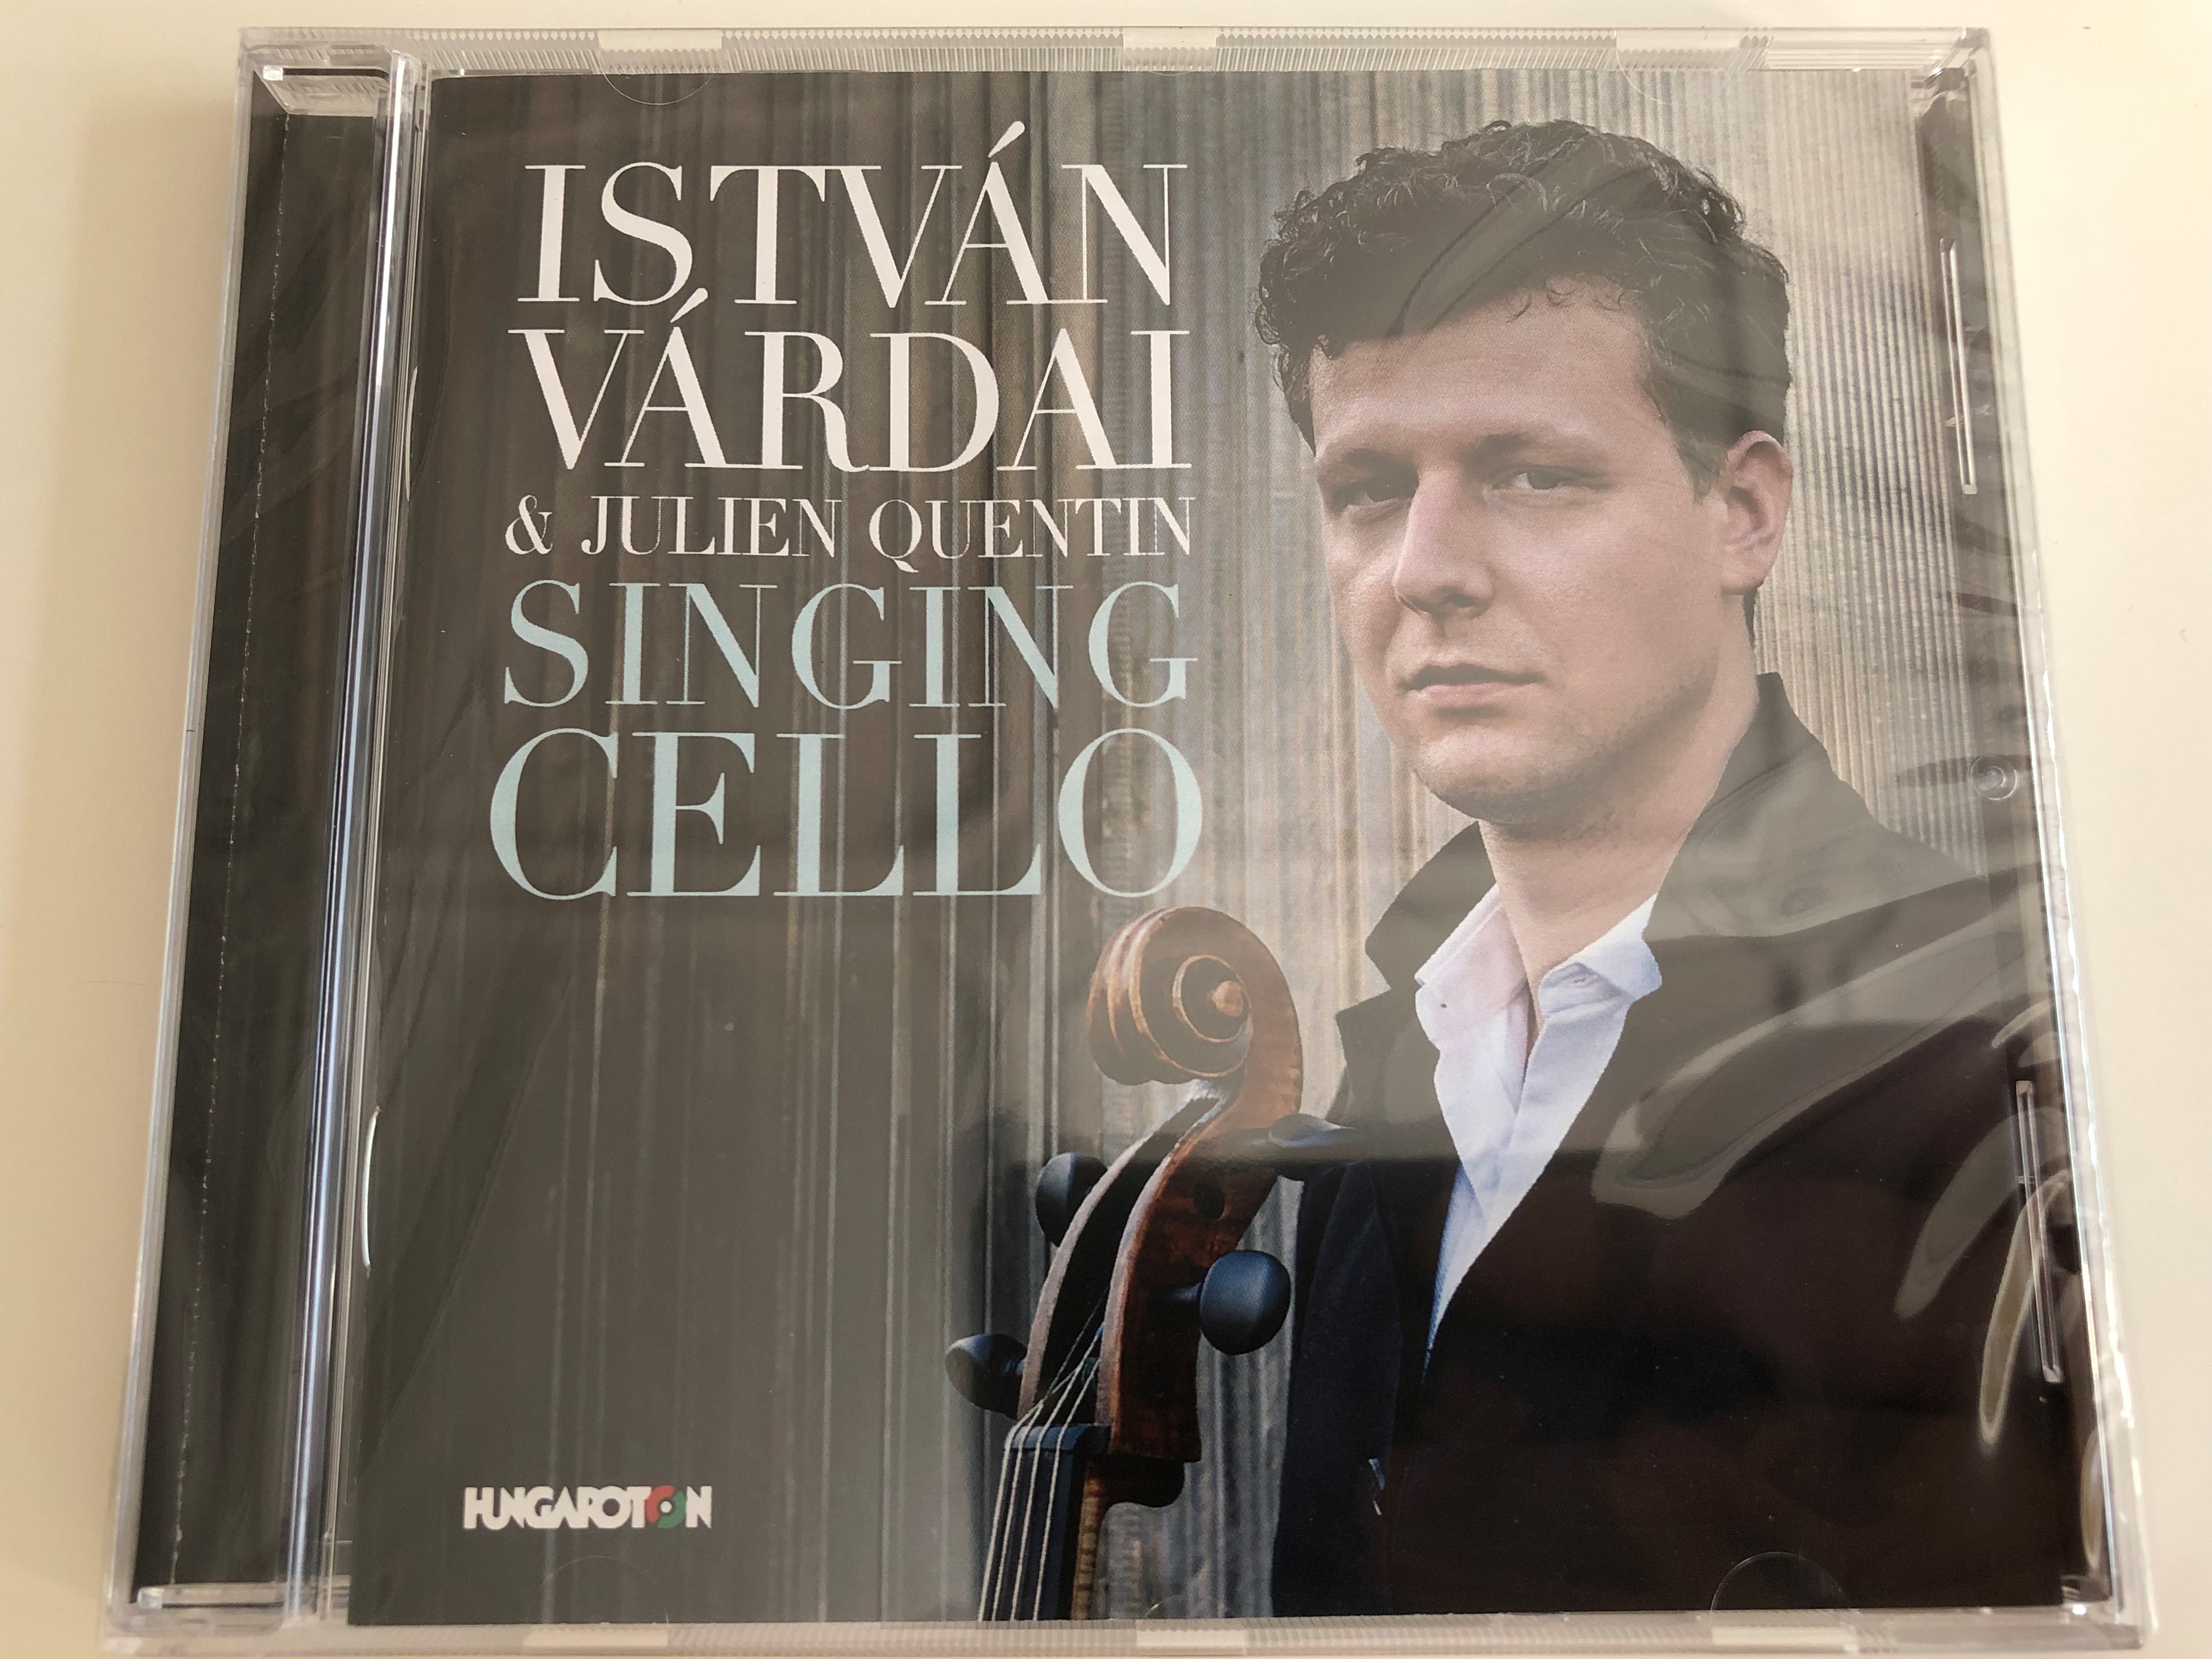 istv-n-v-rdai-julien-quentin-singing-cello-hungaroton-audio-cd-2015-1-.jpg